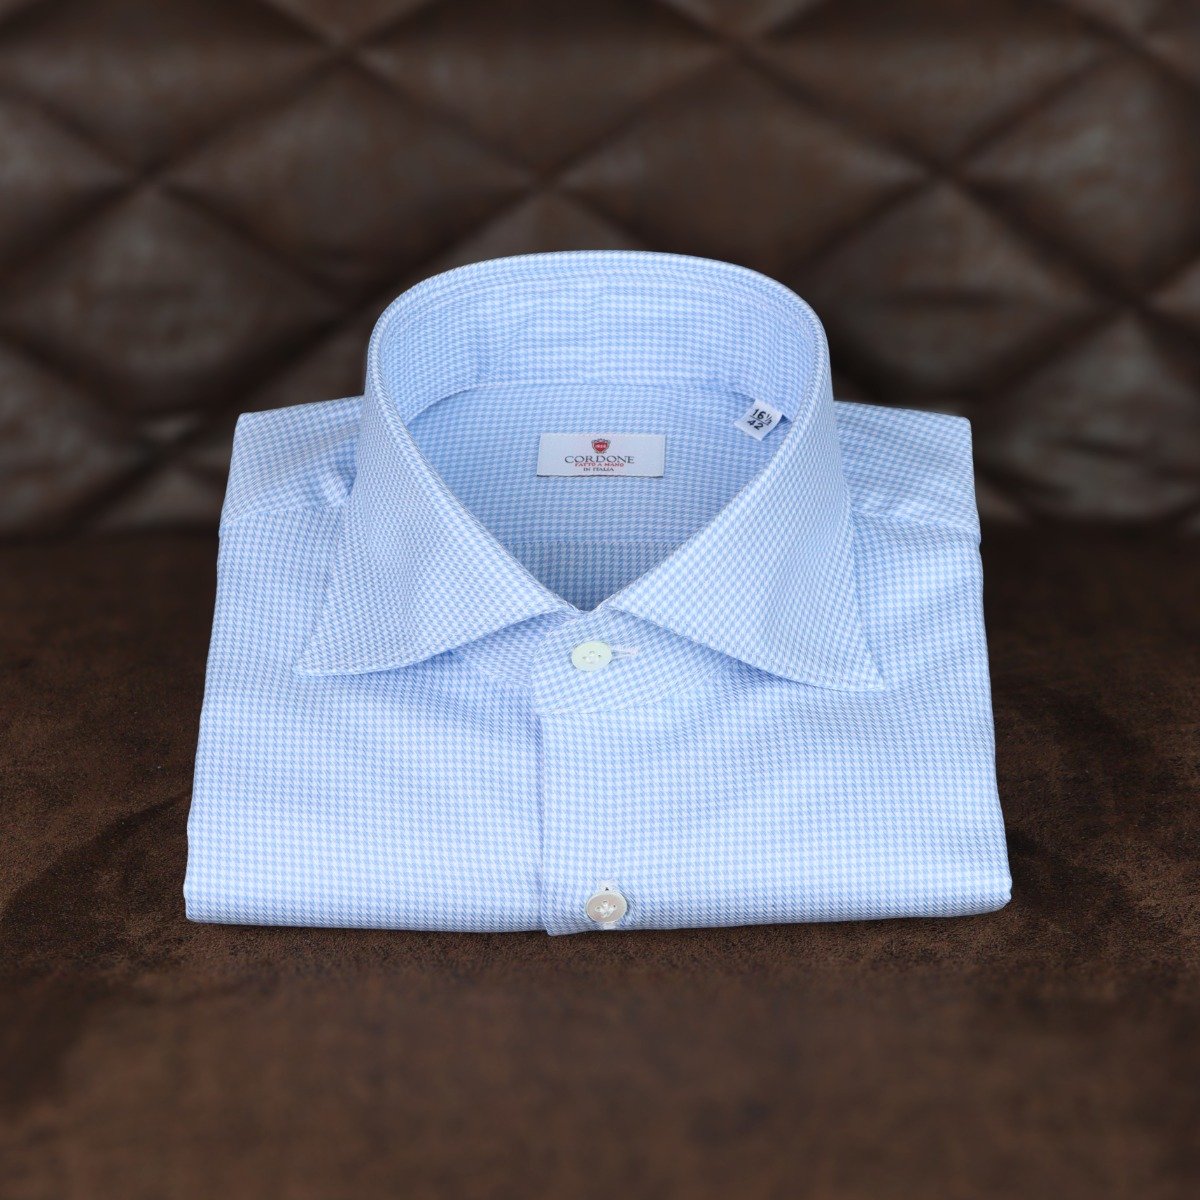 Blue checked dress shirt- top 5 men's dress shirts